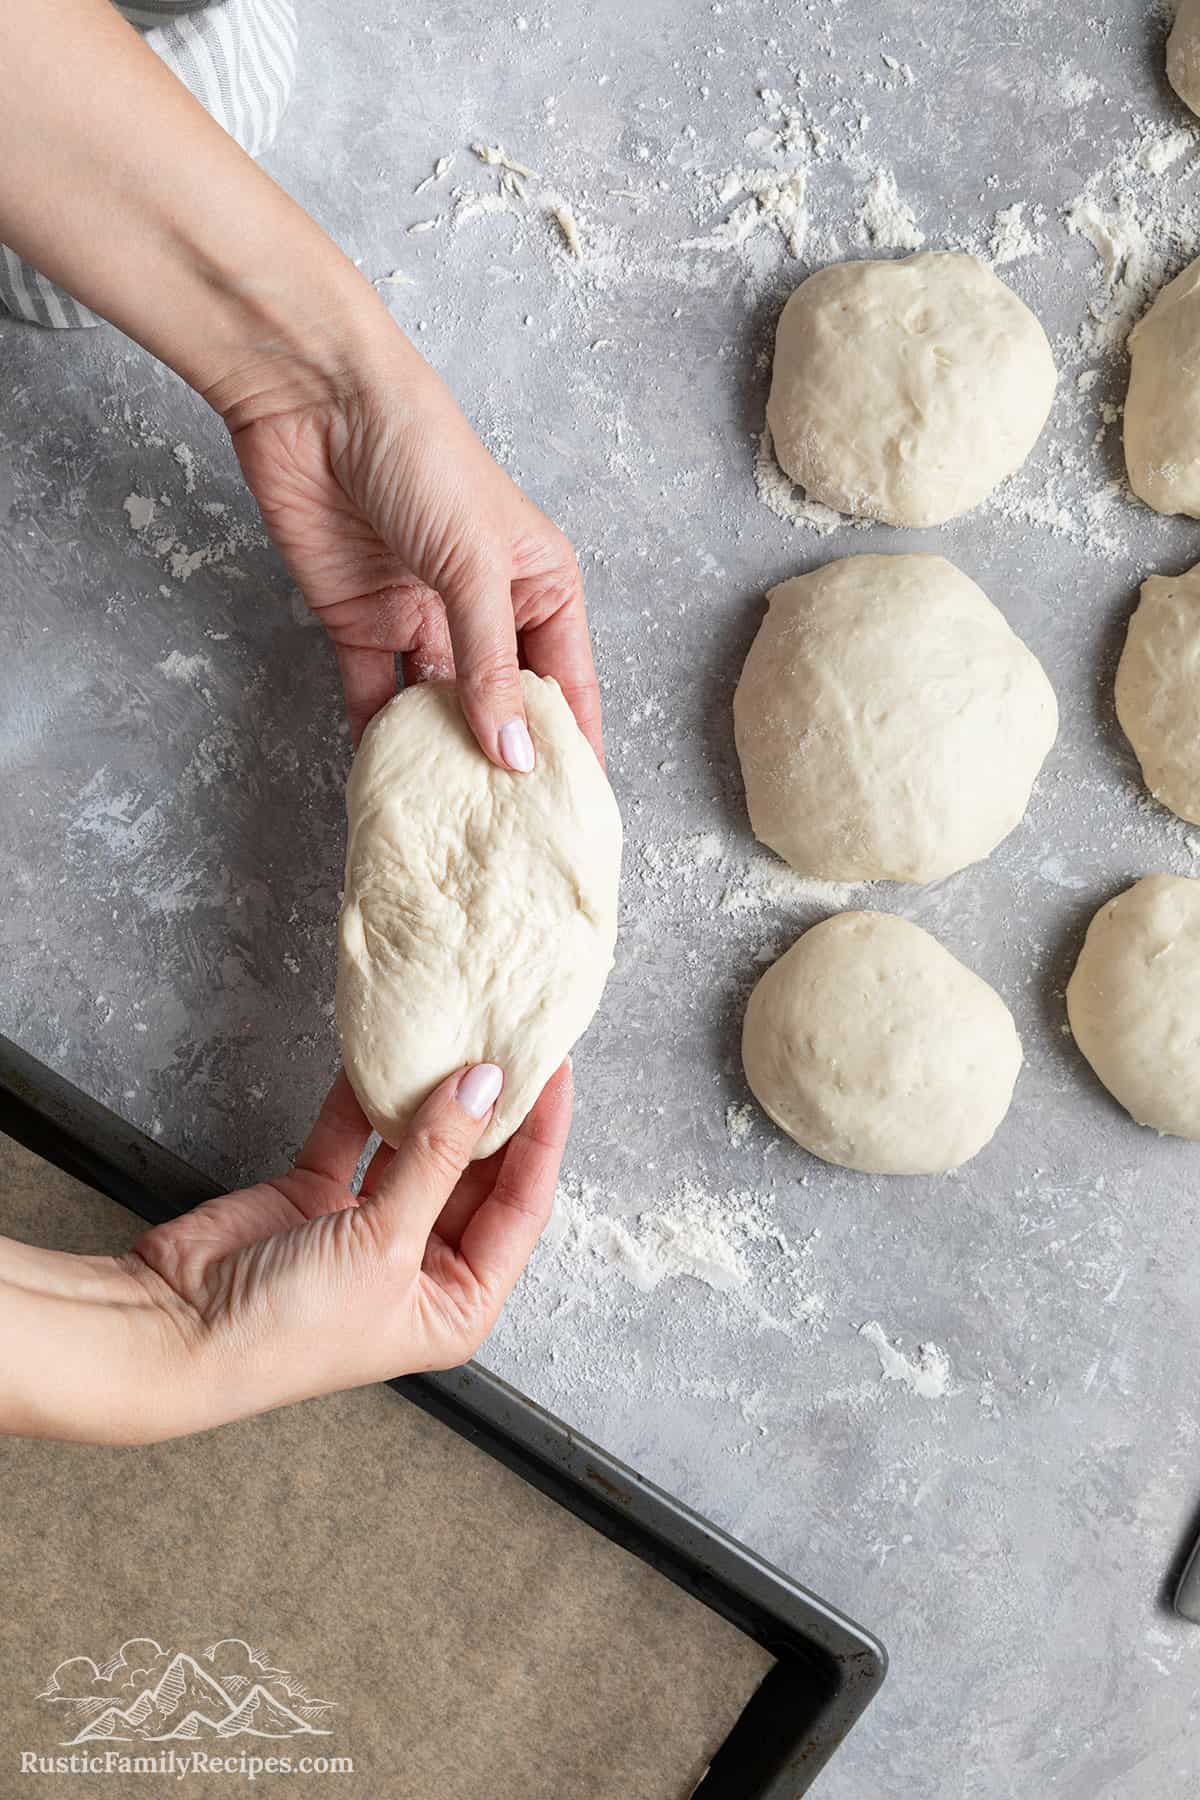 Stretching the telera dough into an oblong shape.